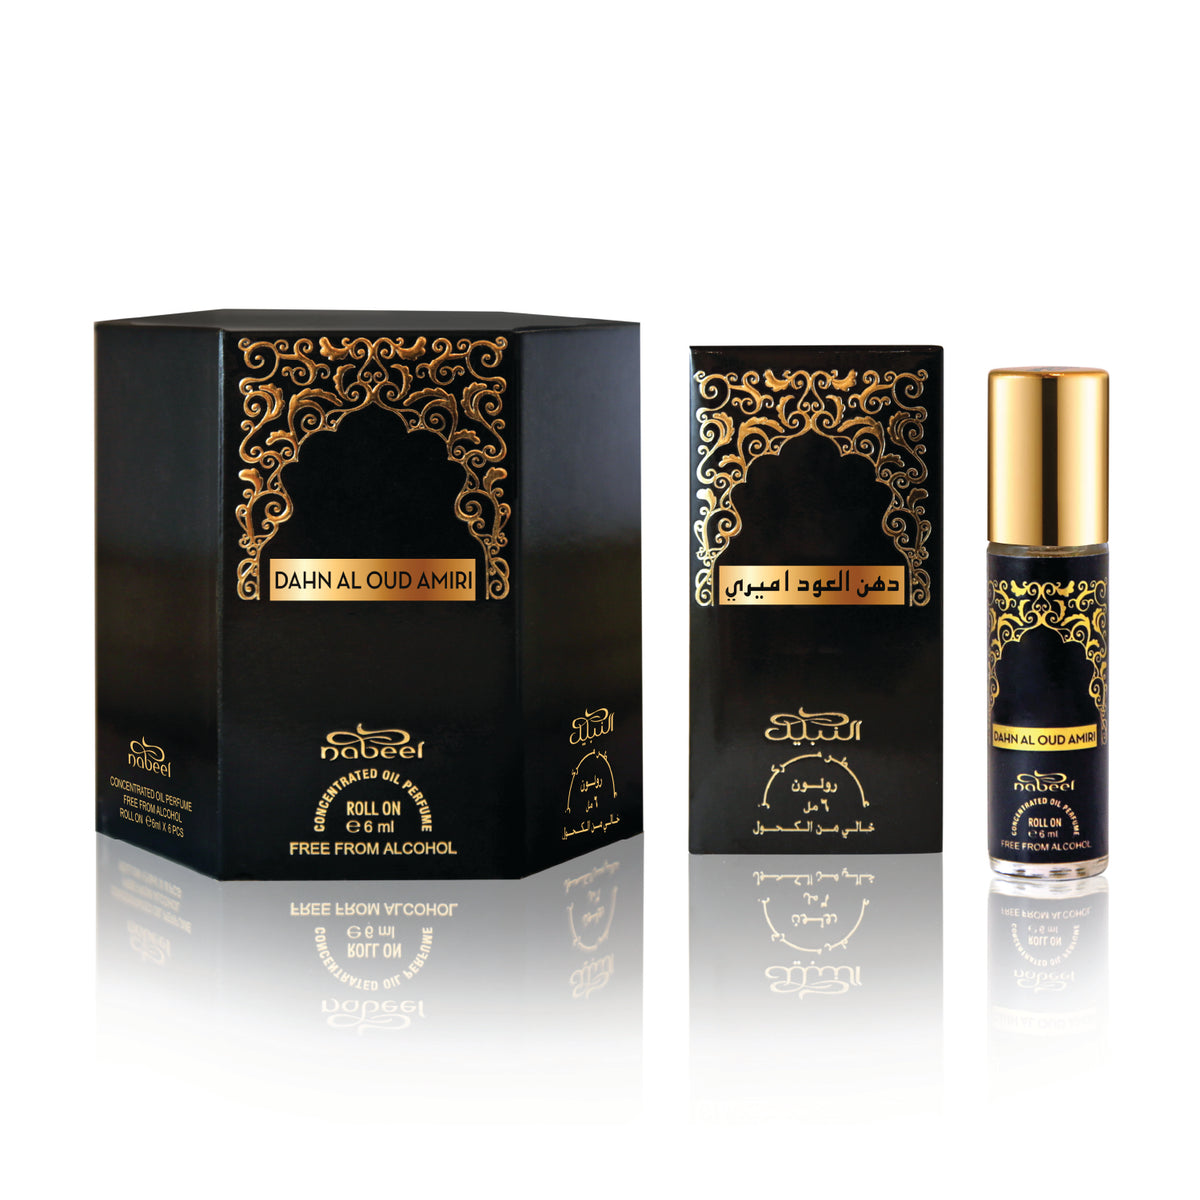 Nabeel - Dahn Al Oud Amiri Premium Attar Roll-on Perfume Oil | 100% Non Alcoholic | Gift Set - 6ml (Pack of 6) | Made in U.A.E